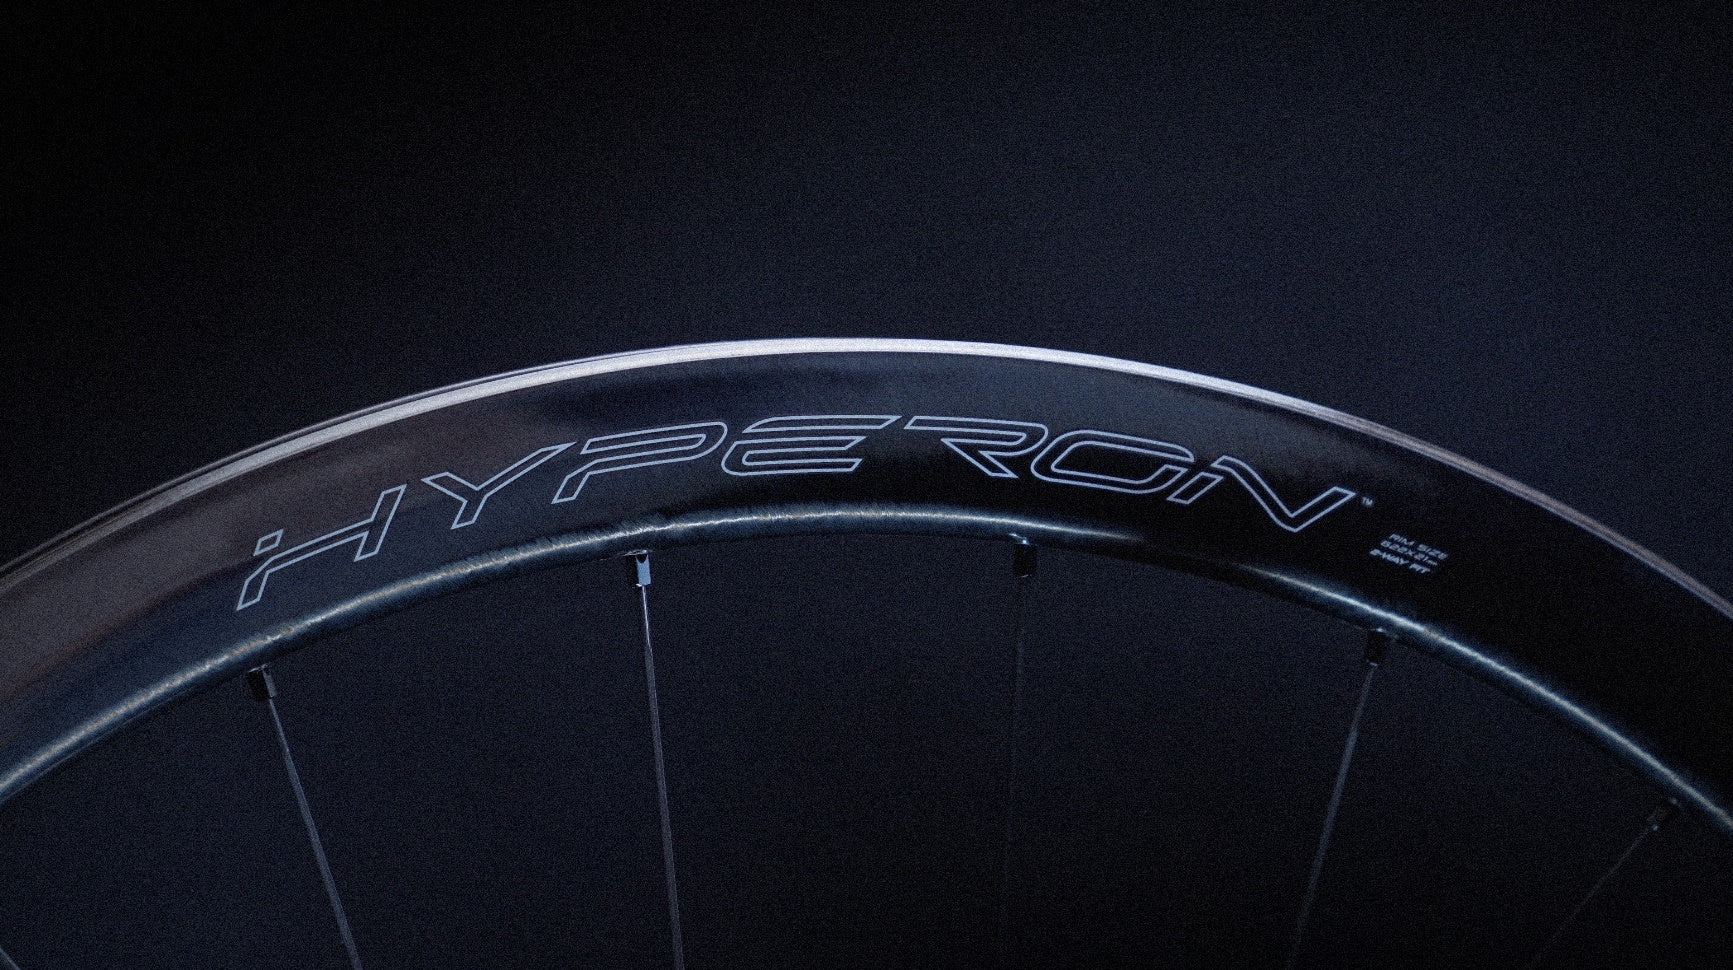 Campagnolo延伸輕量及高性能輪組系列：全新的Hyperon輪組